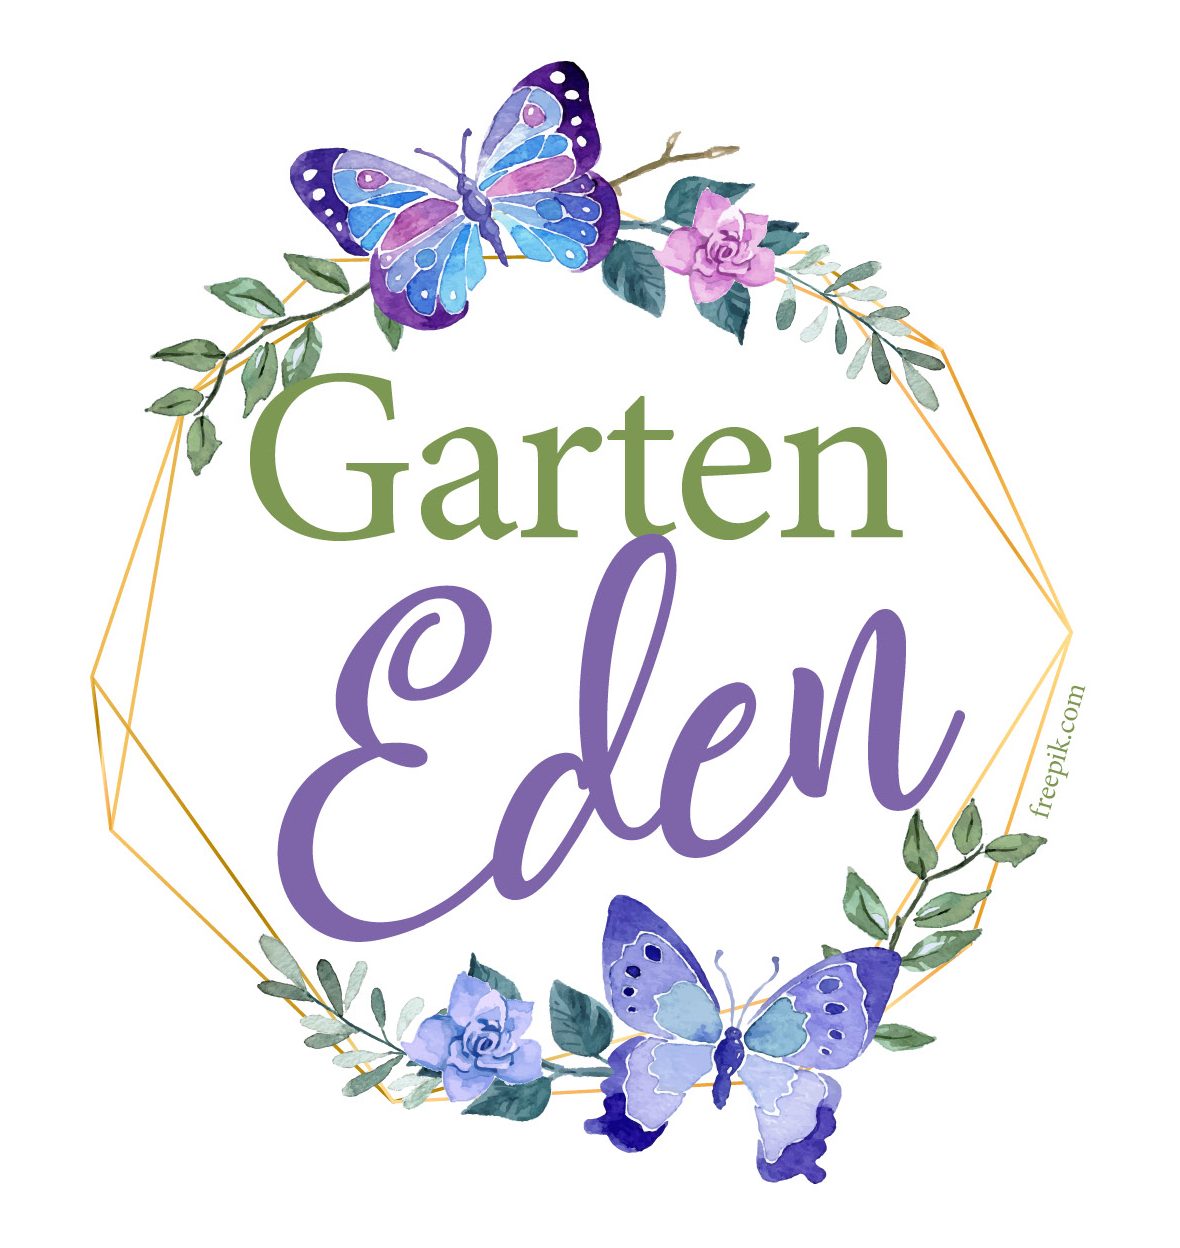 Garten Eden